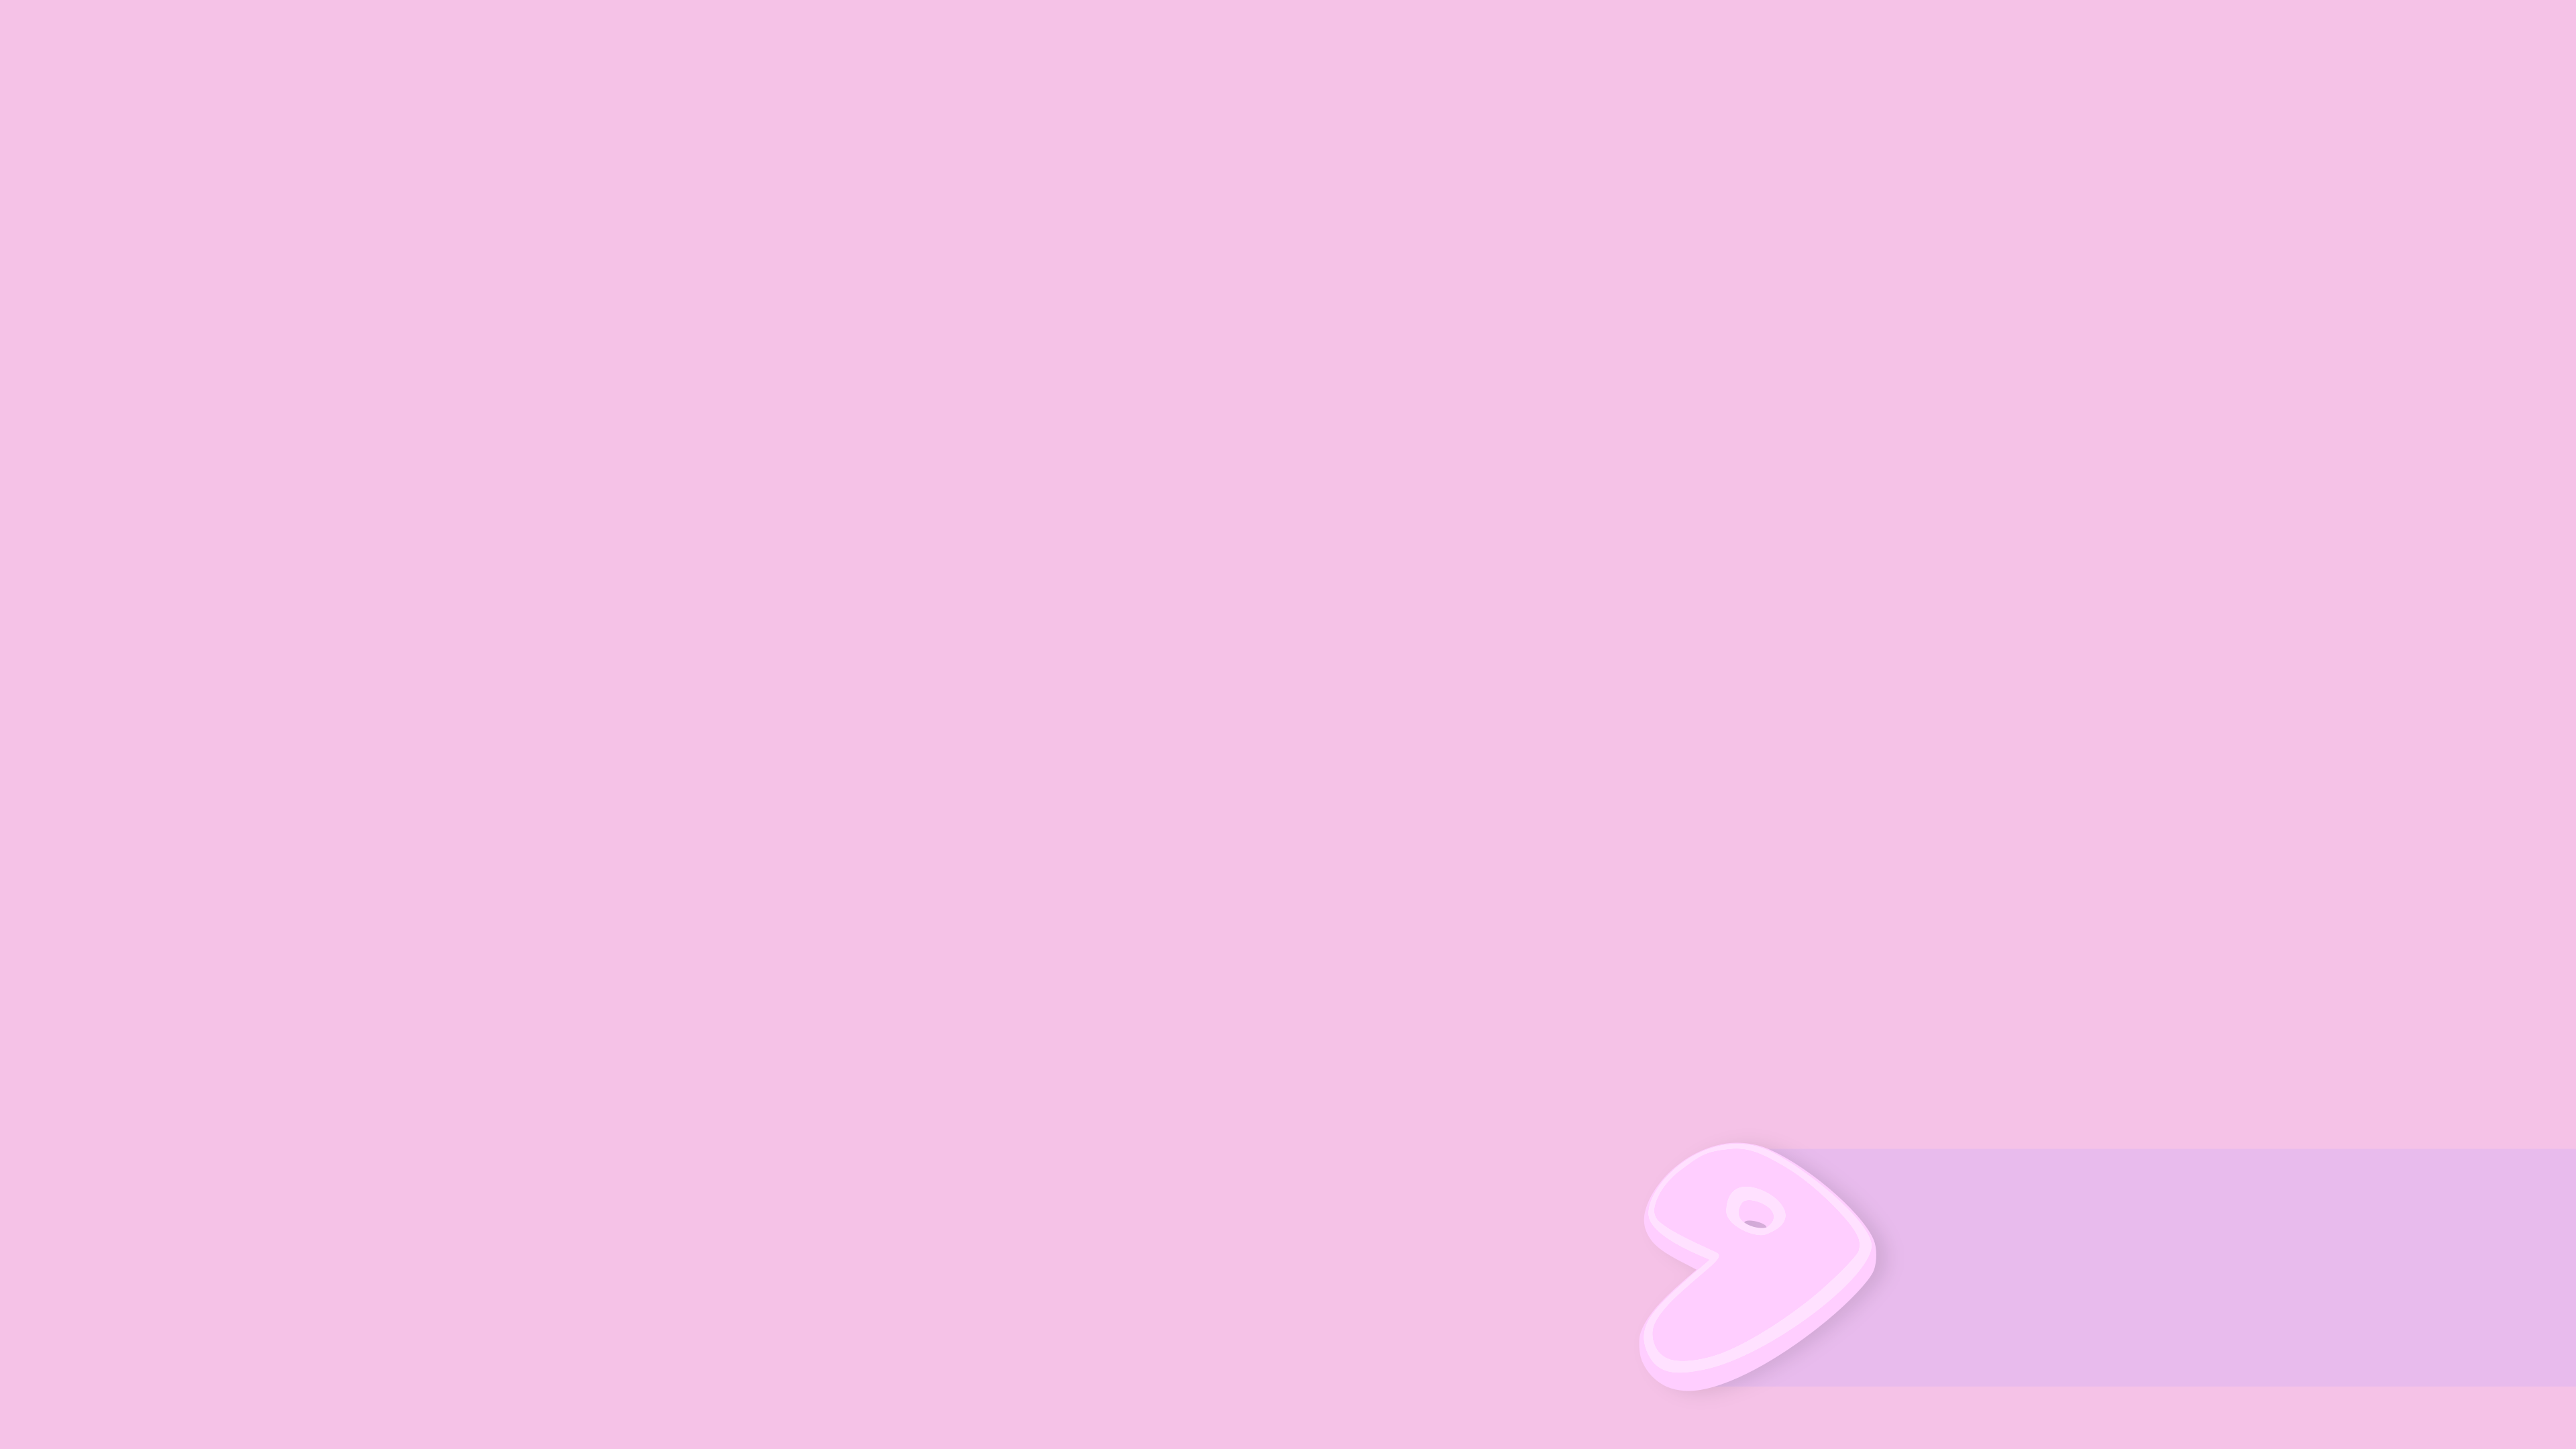 Gentoo Linux Pink Minimalism Simple Background Pink Background 3840x2160